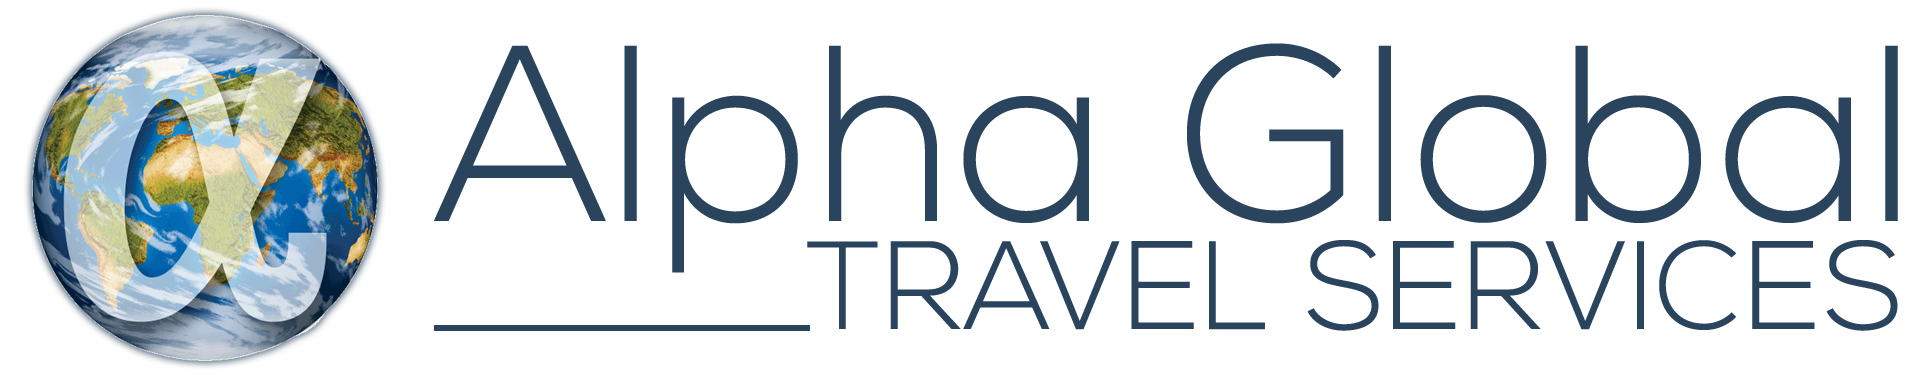 alpha-global-travel-services